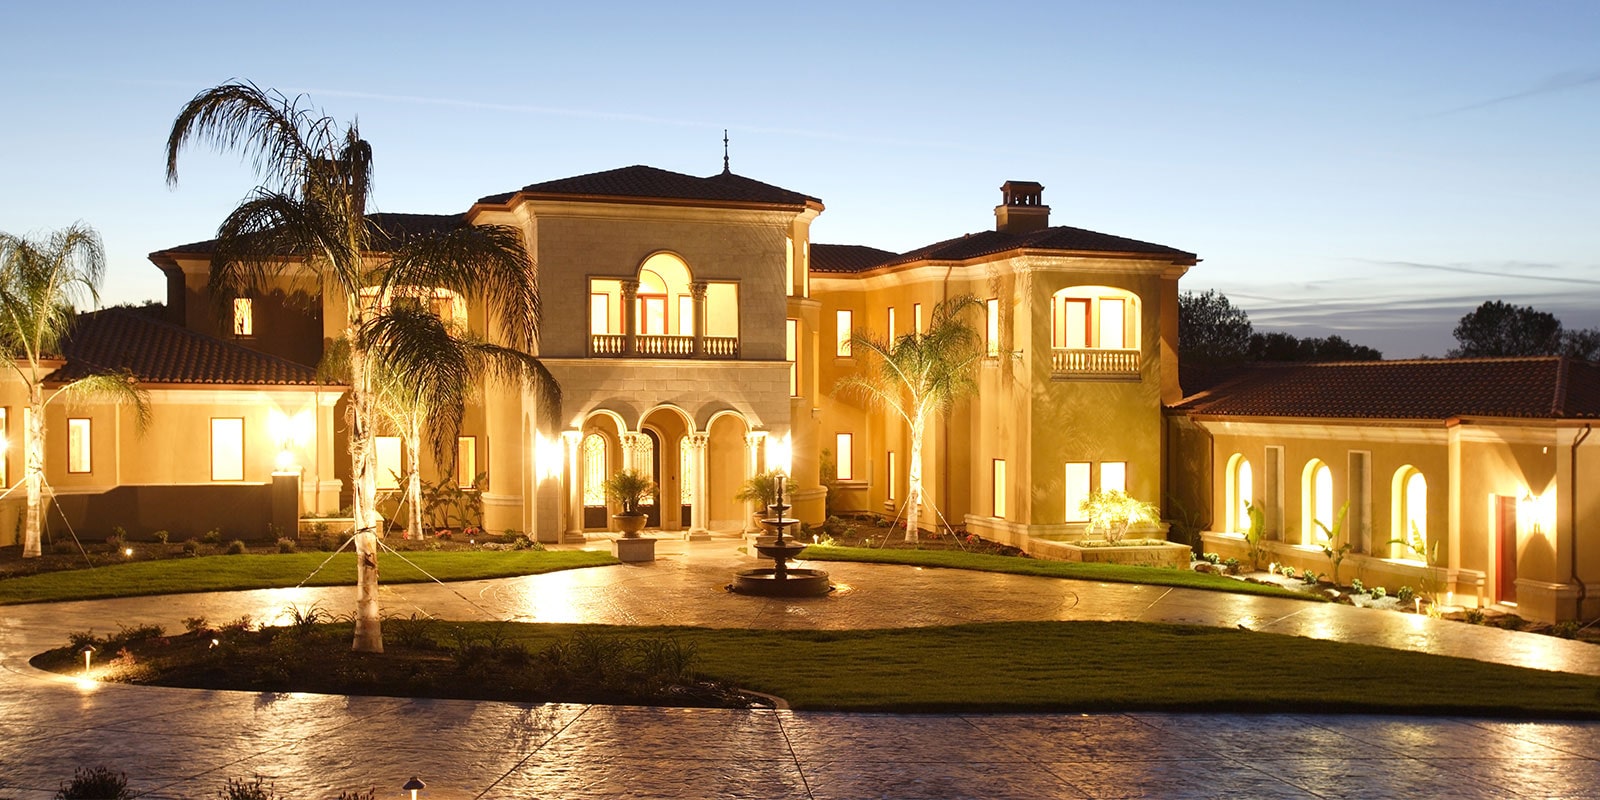 Luxury Mansion with warm light